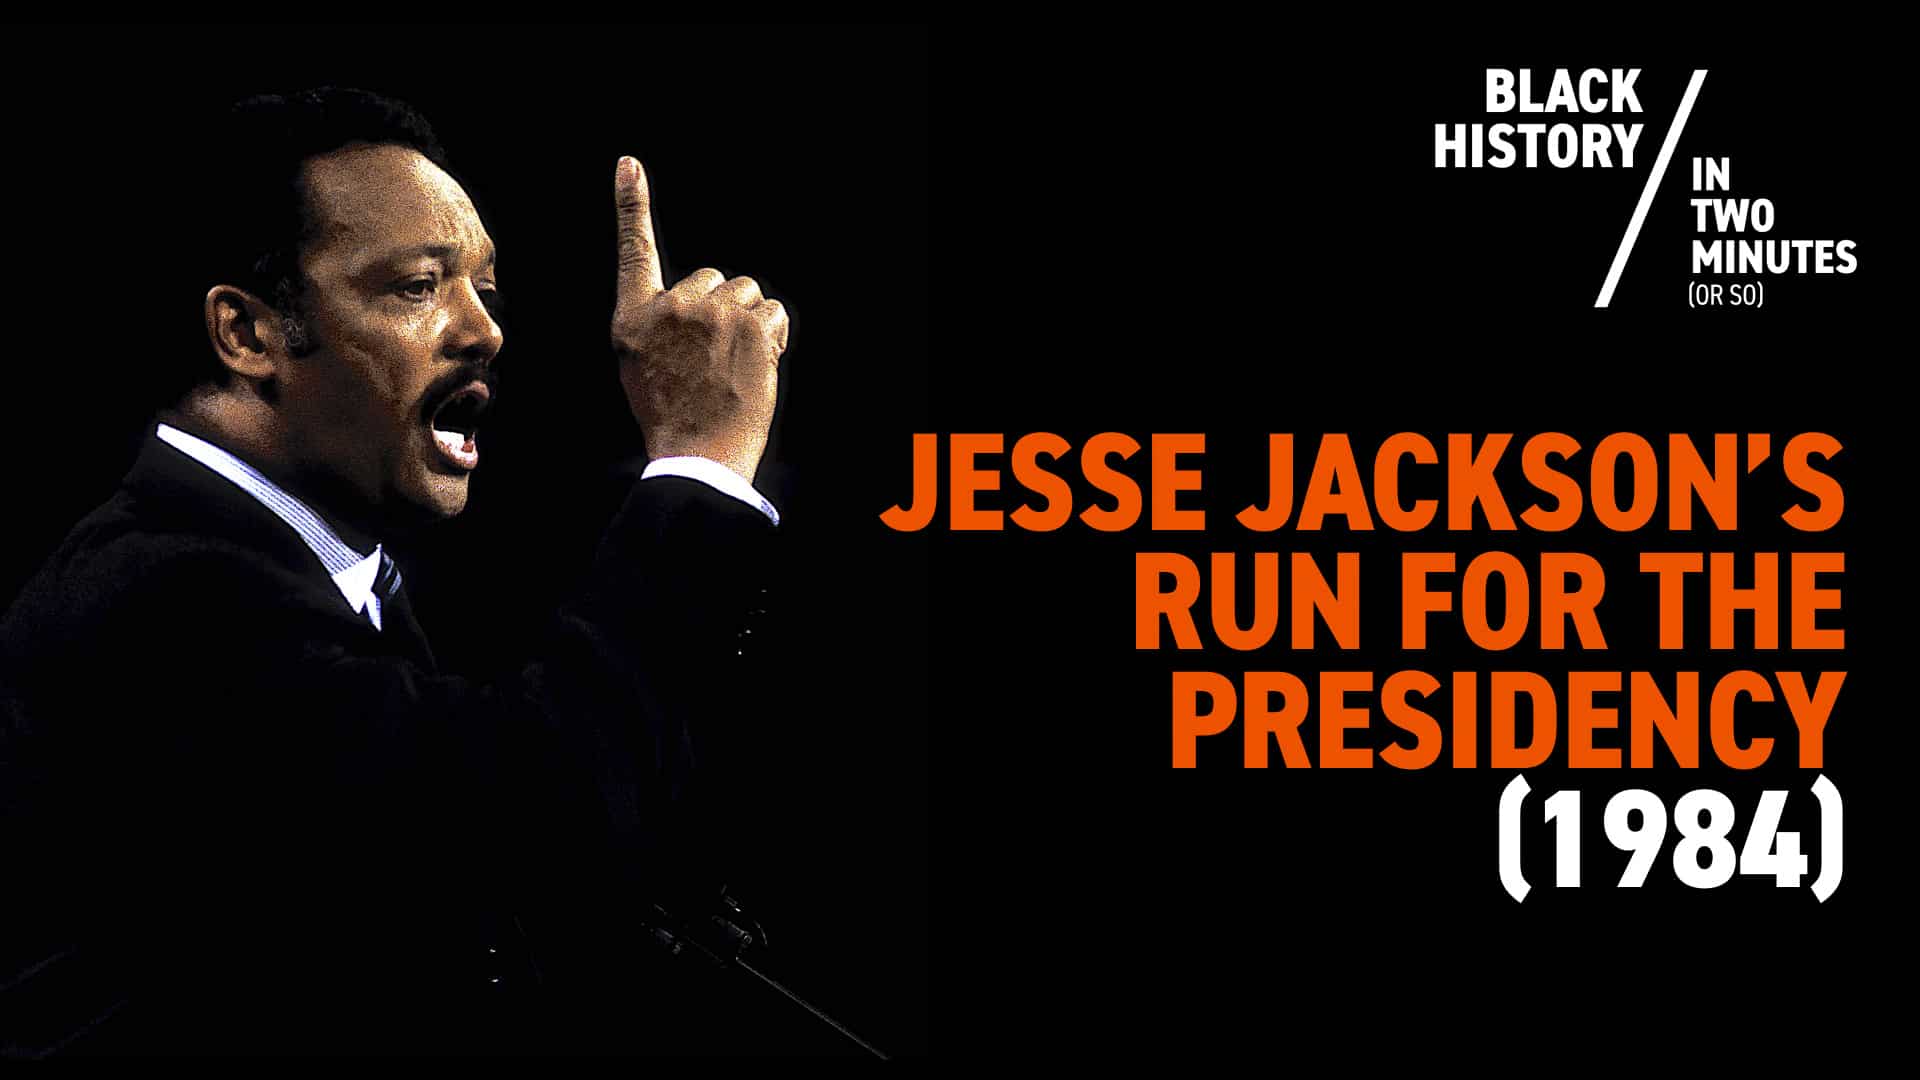 Jesse Jackson's Presidential Run (1984)